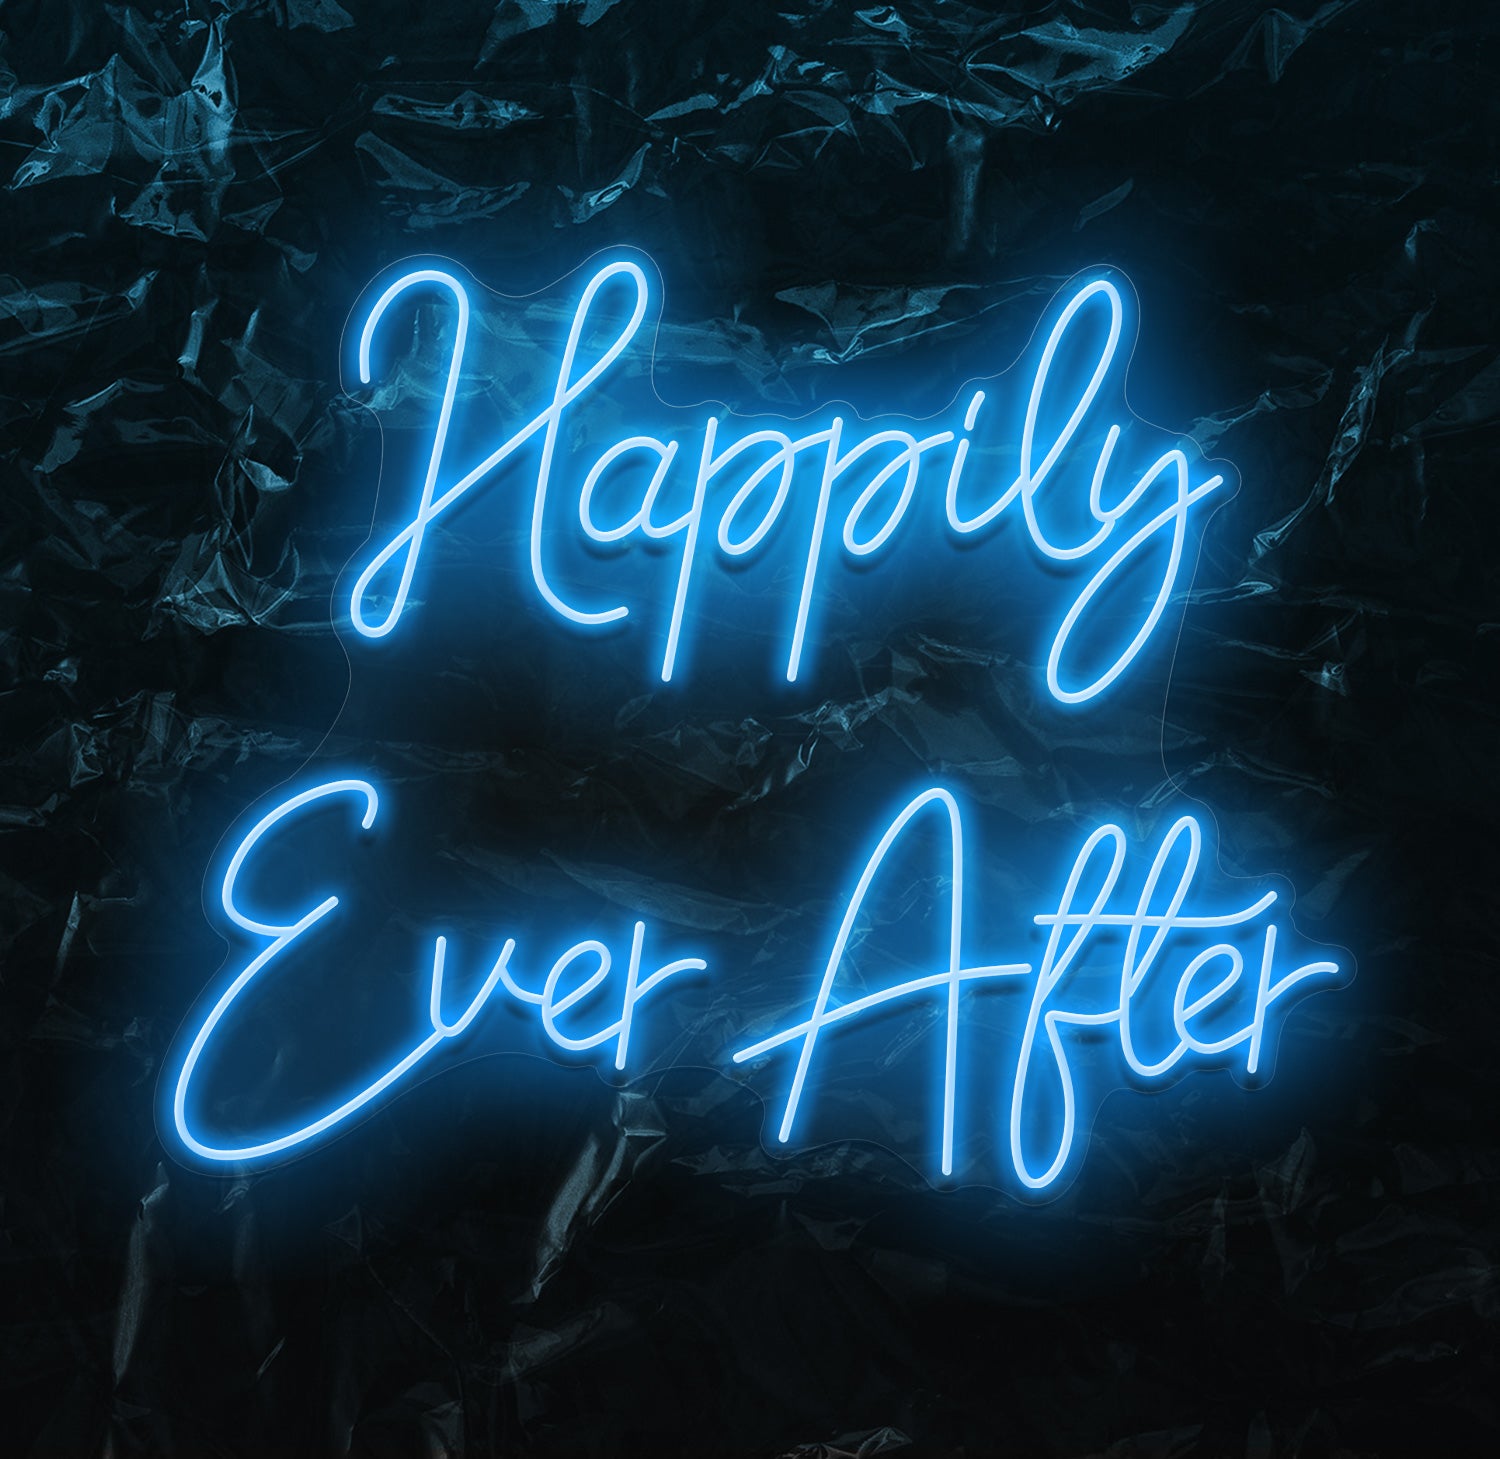 " Happily Ever After" LED Neon Schriftzug - NEONEVERGLOW